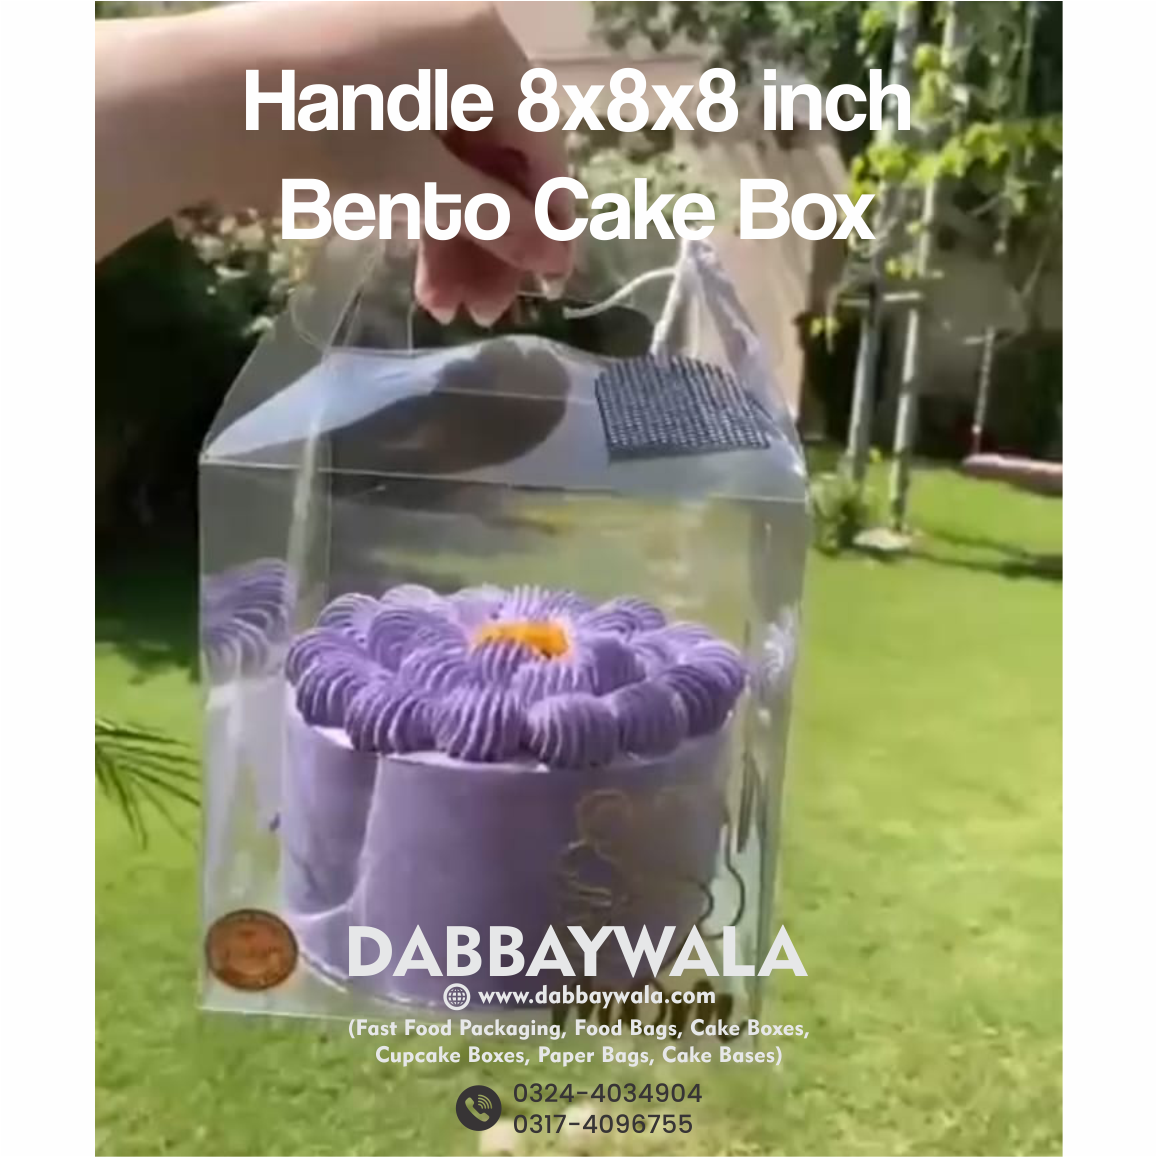 Handle 8x8x8 inch Bento Cake Box